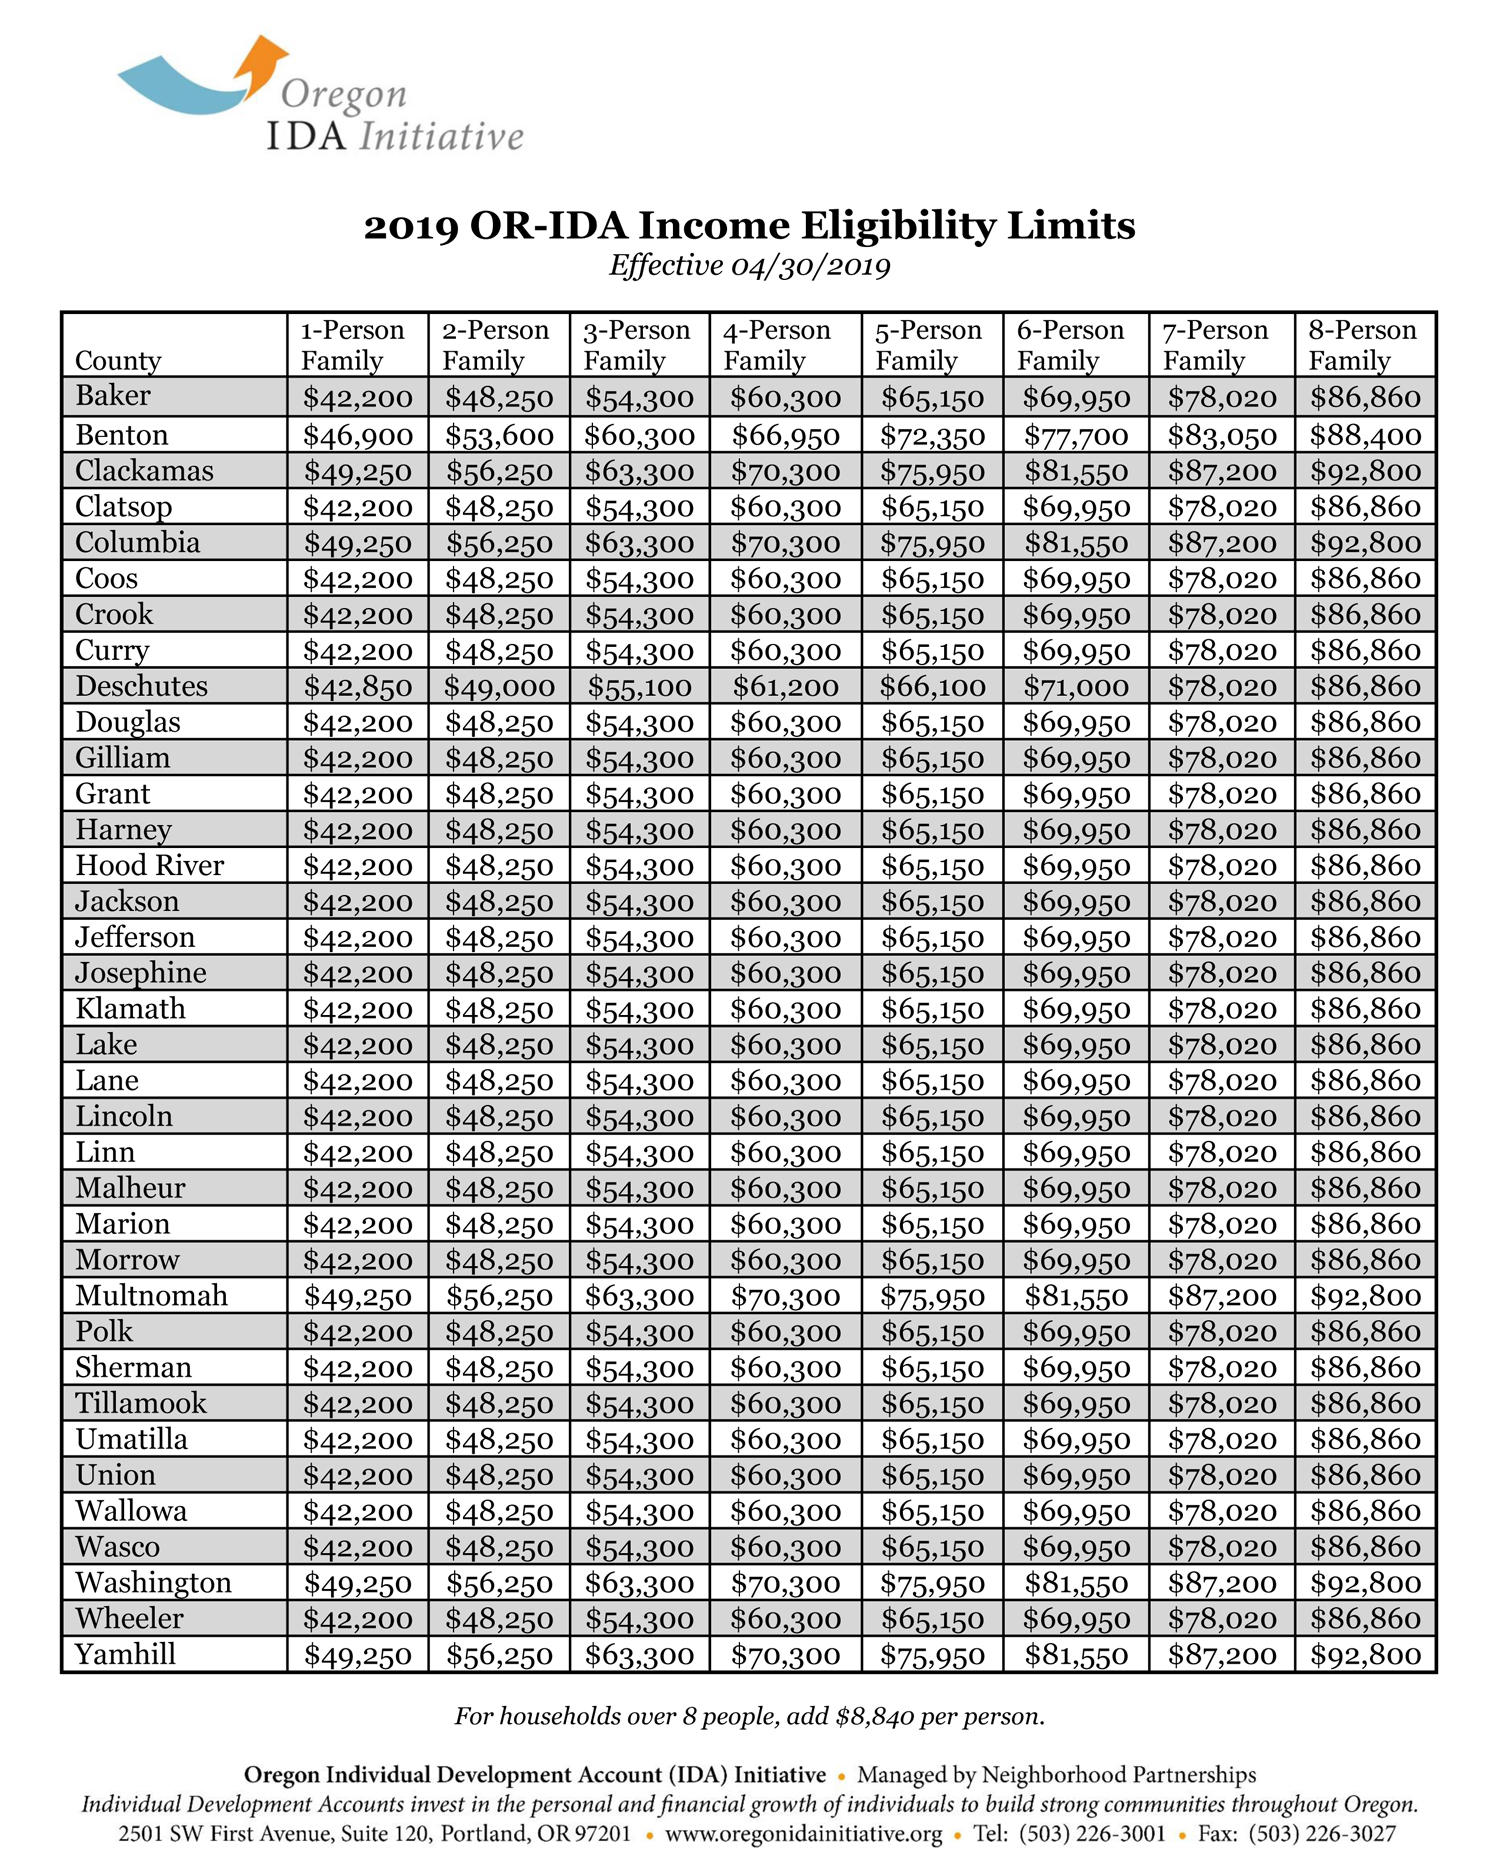 or-ida-program-income-limits-2019-final-04